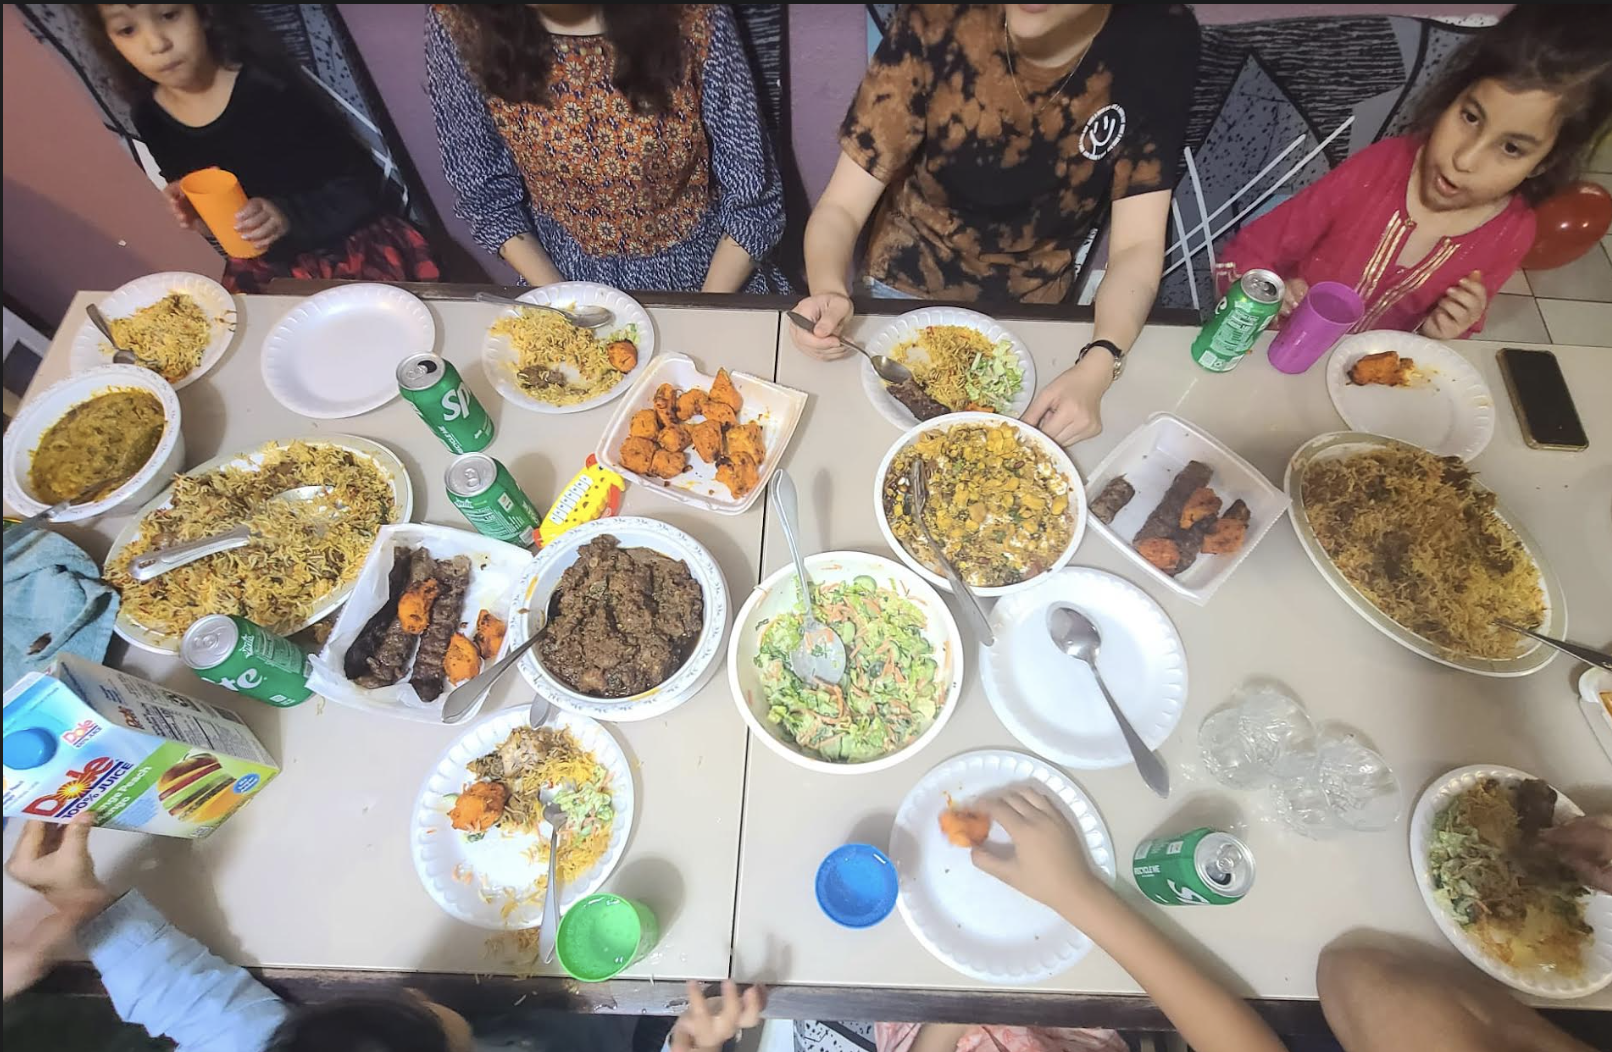 Wareesha and her host family eating Pakistani food.